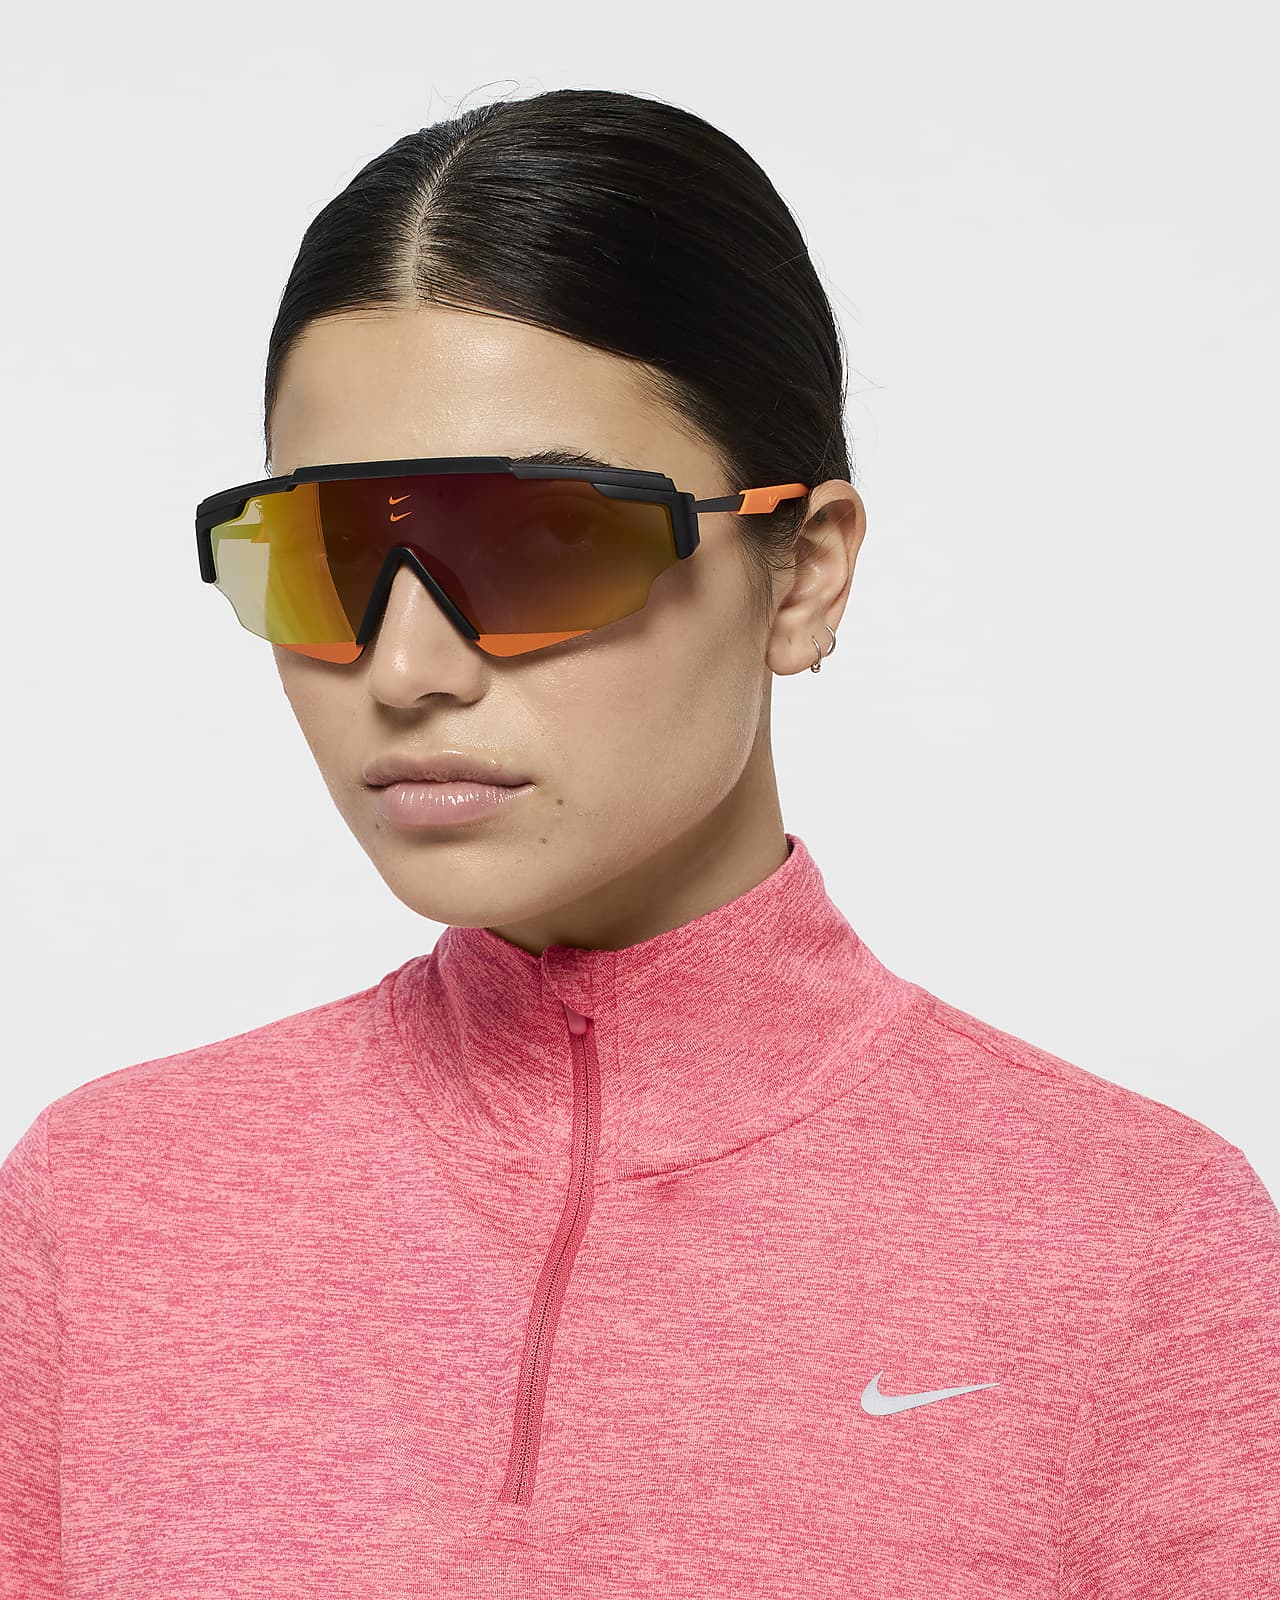 Nike Marquee Edge Road Tint Sunglasses